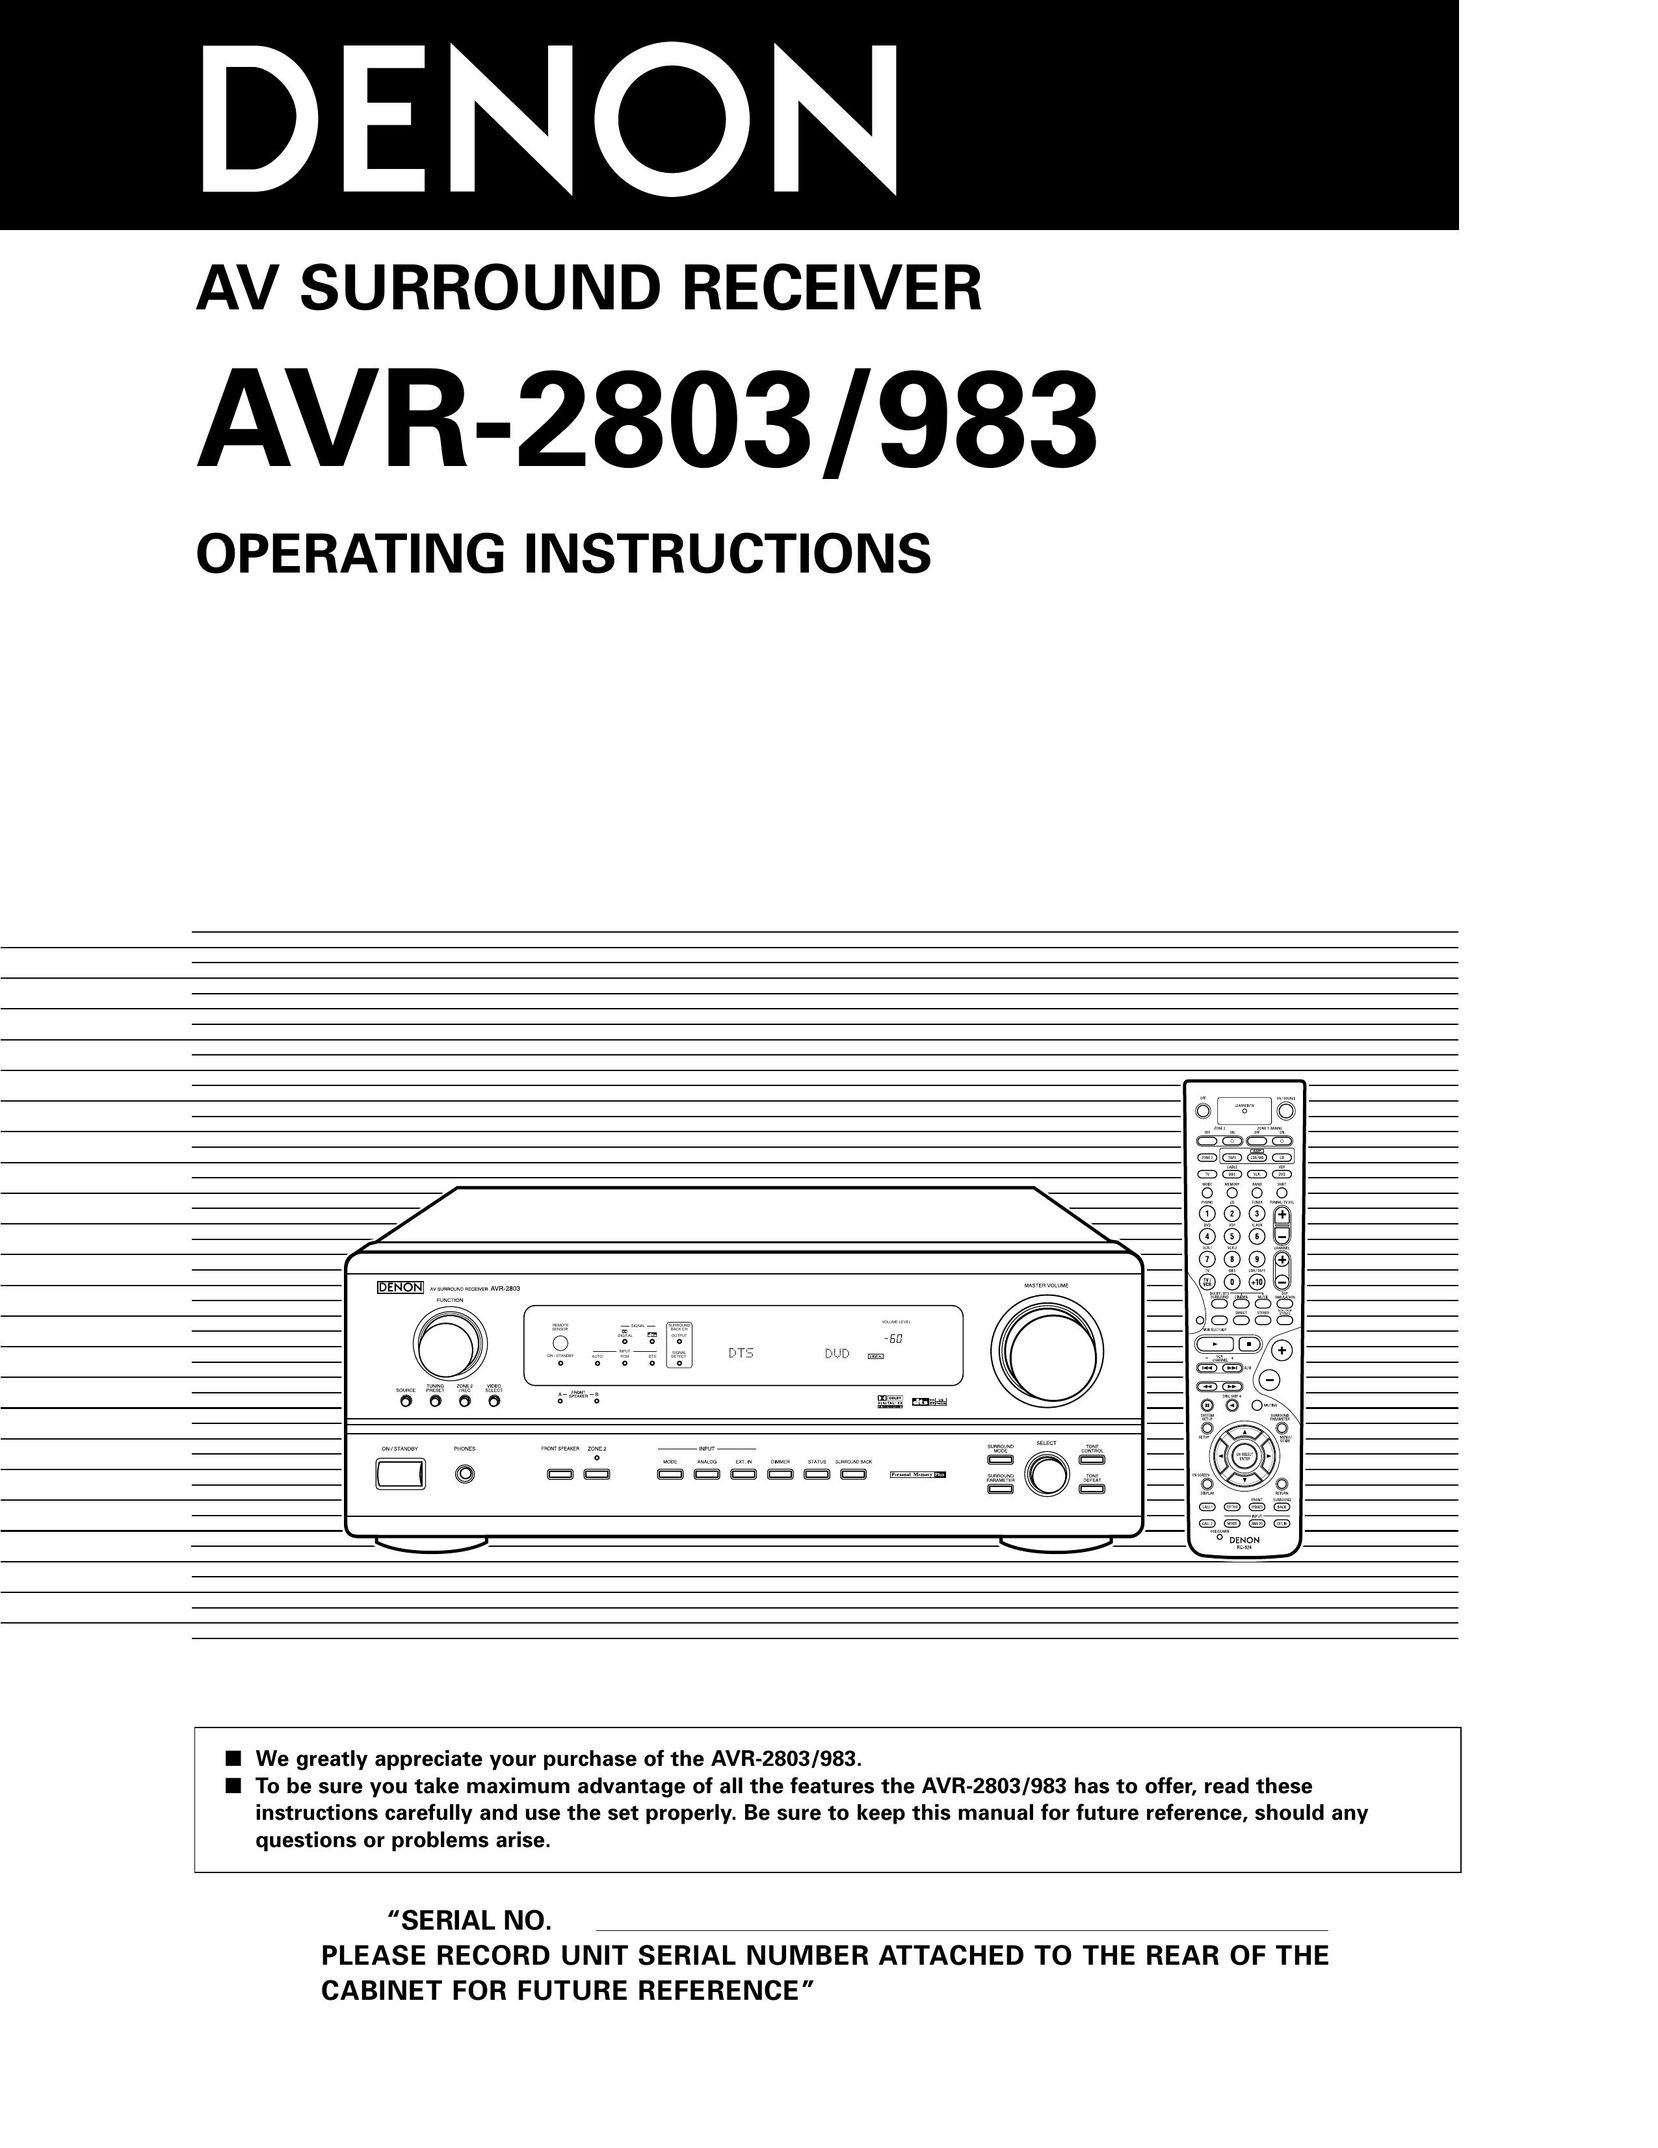 Denon AVR-2803 Stereo System User Manual